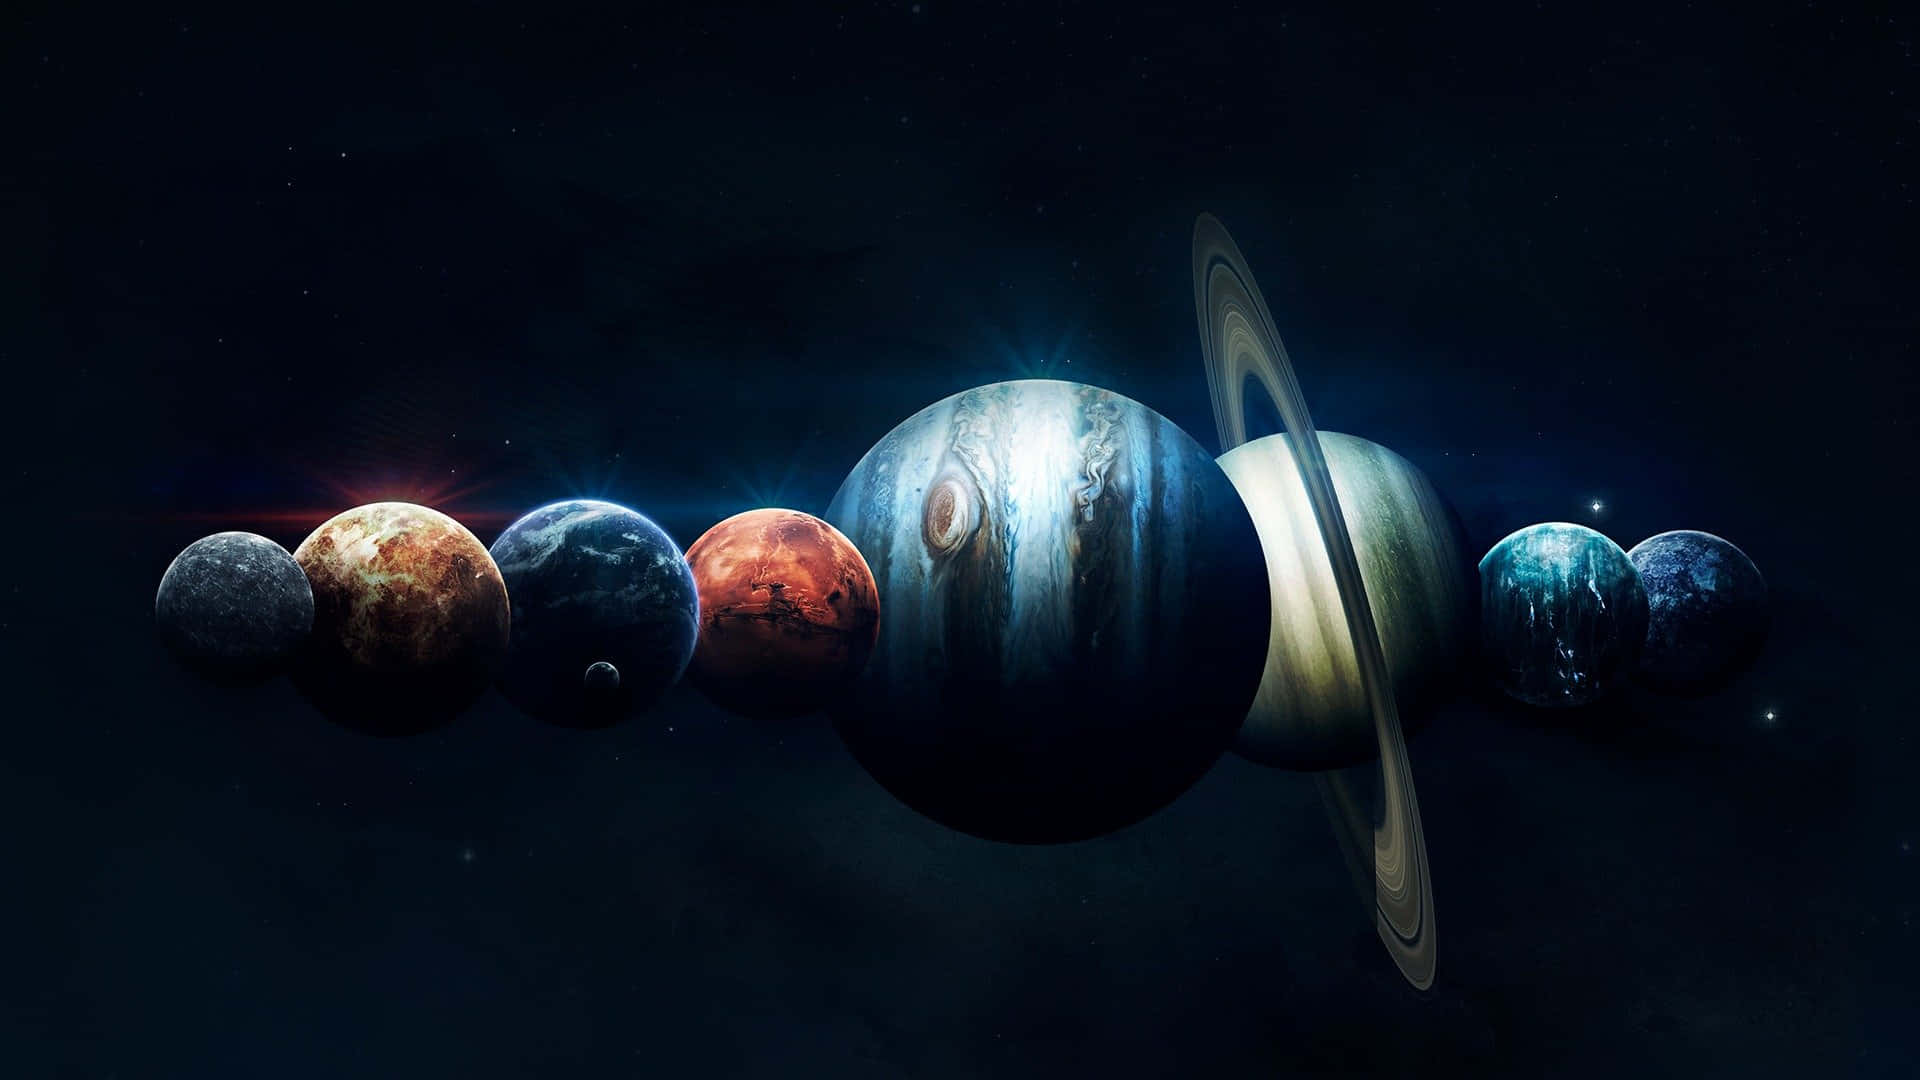 The beautiful, awe-inspiring Solar System